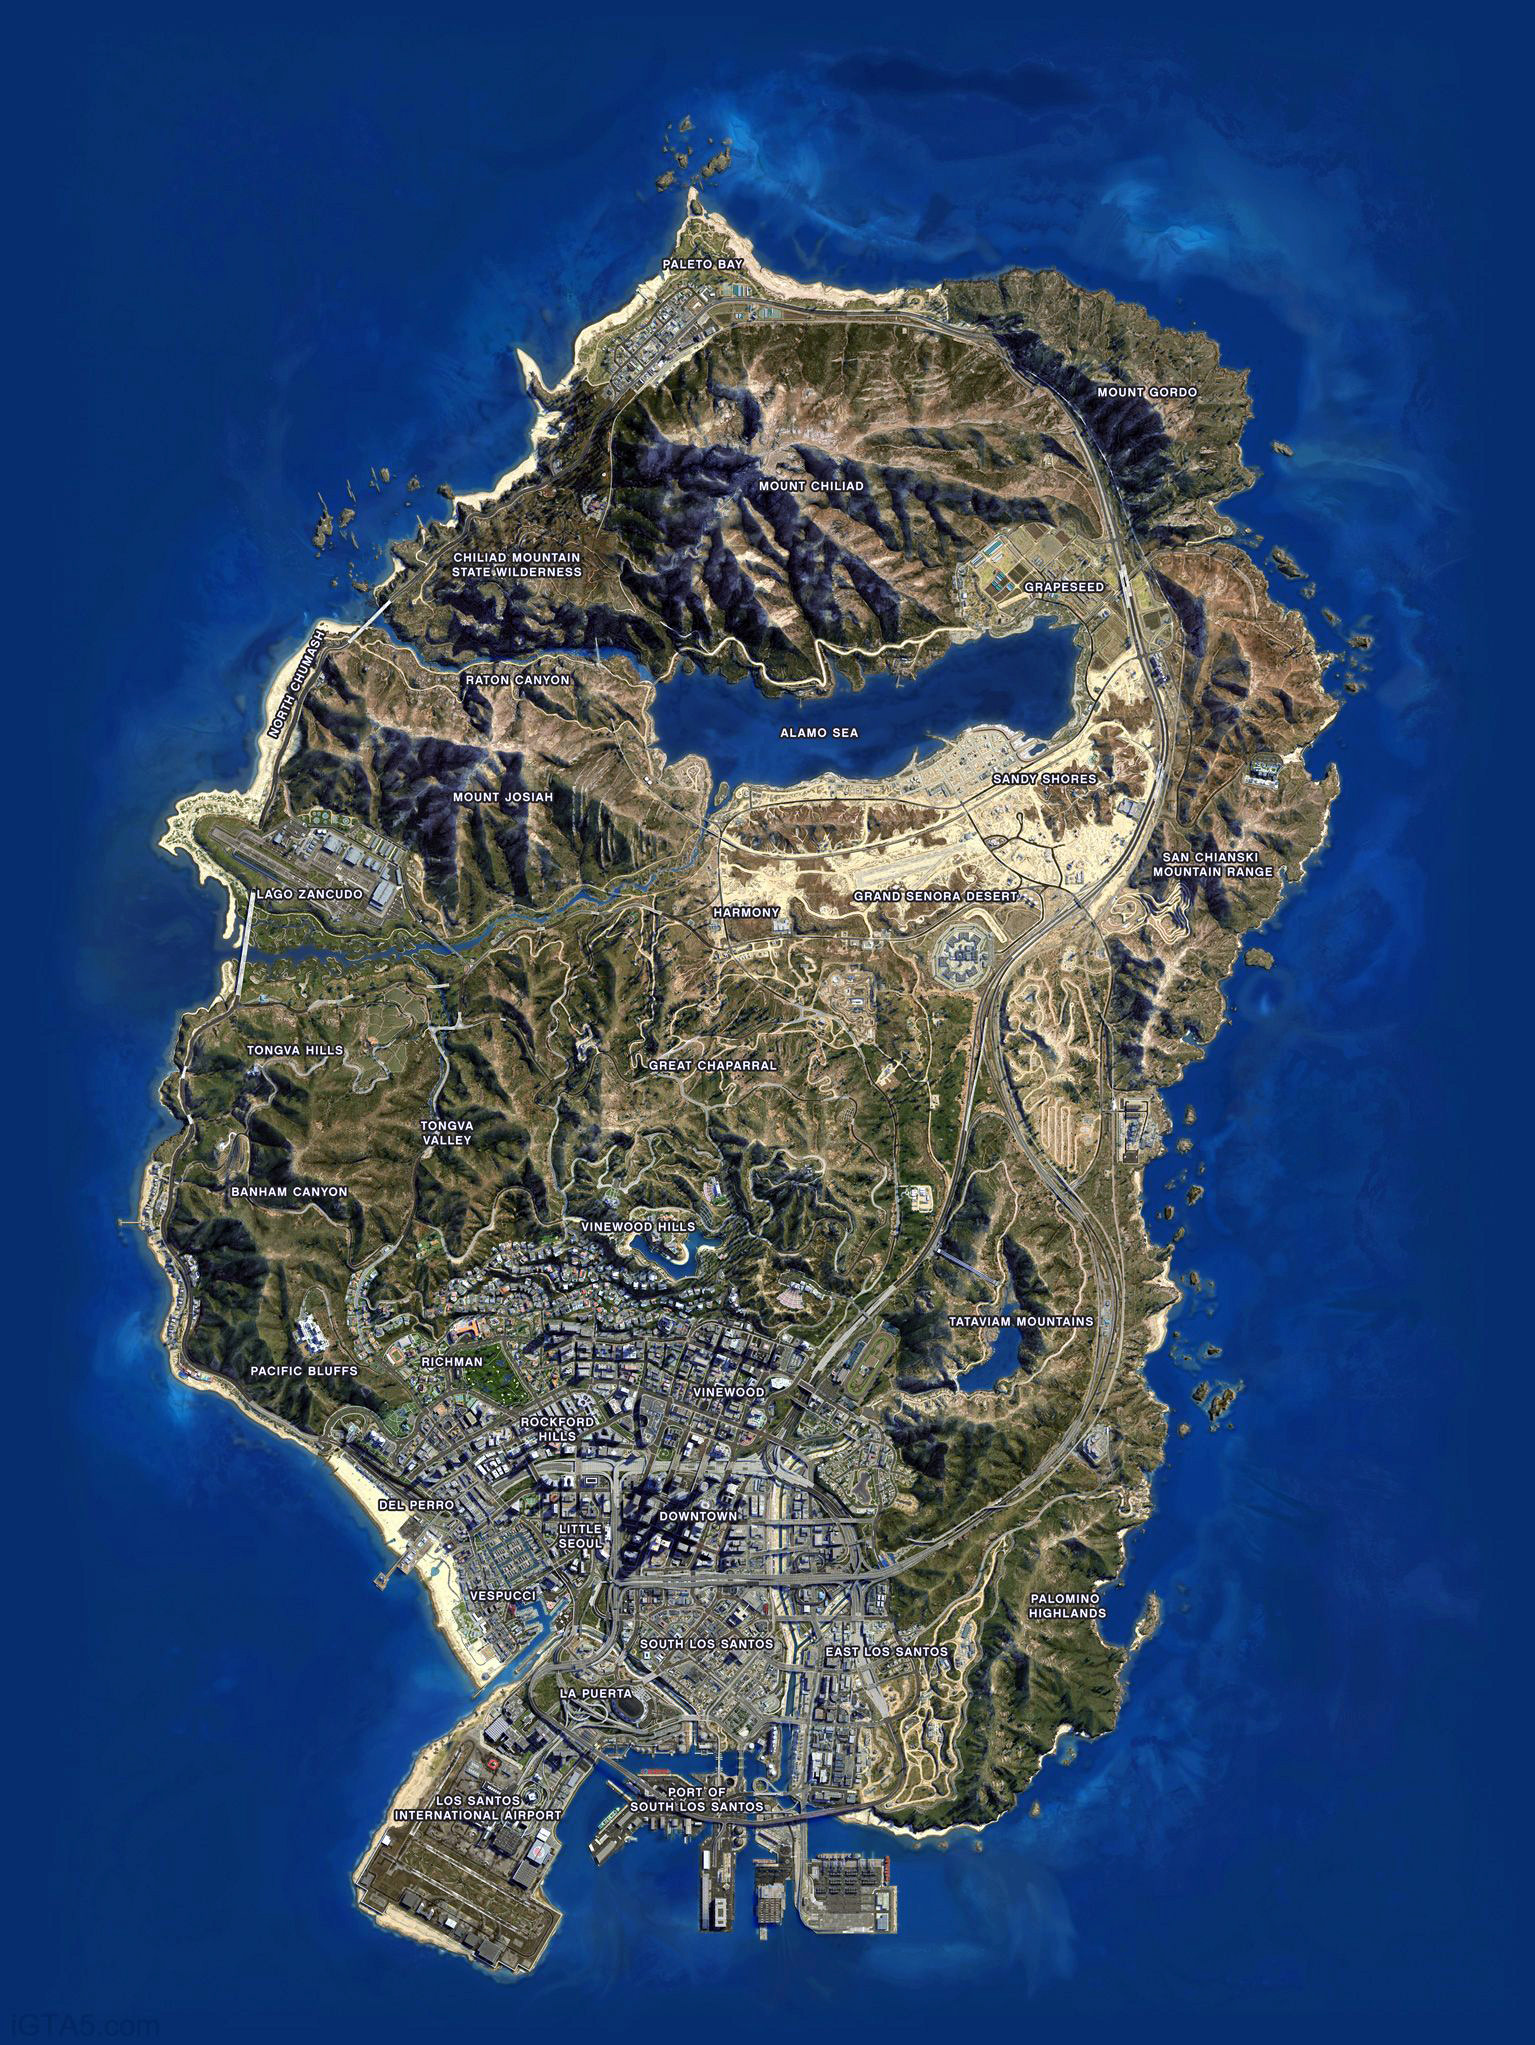 Mapas de GTA V · GTA-Growth